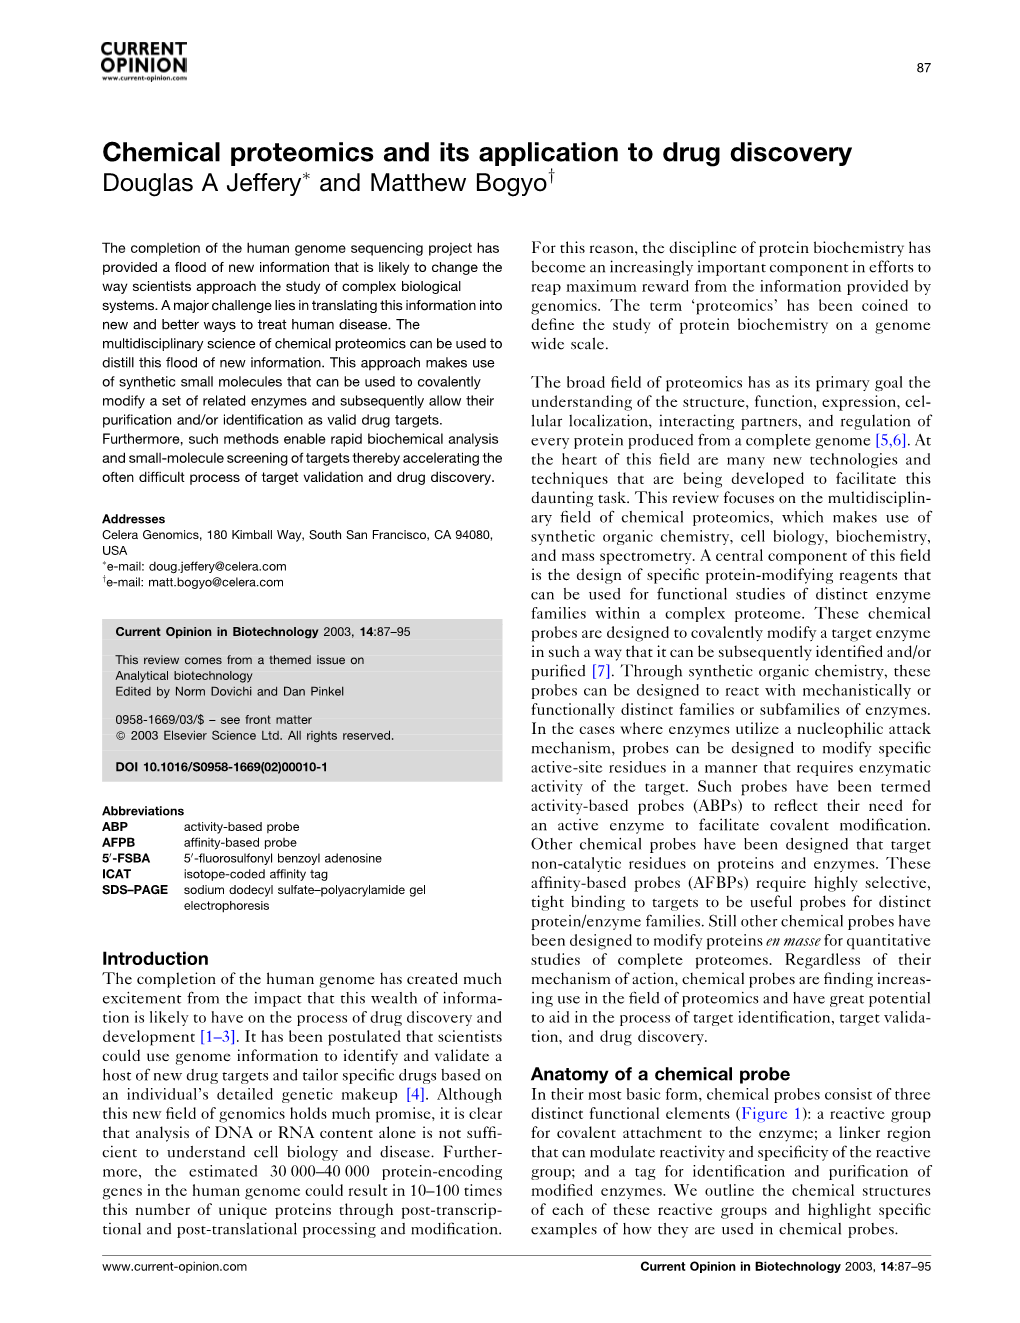 Chemical Proteomics and Its Application to Drug Discovery Douglas a Jefferyã and Matthew Bogyoy